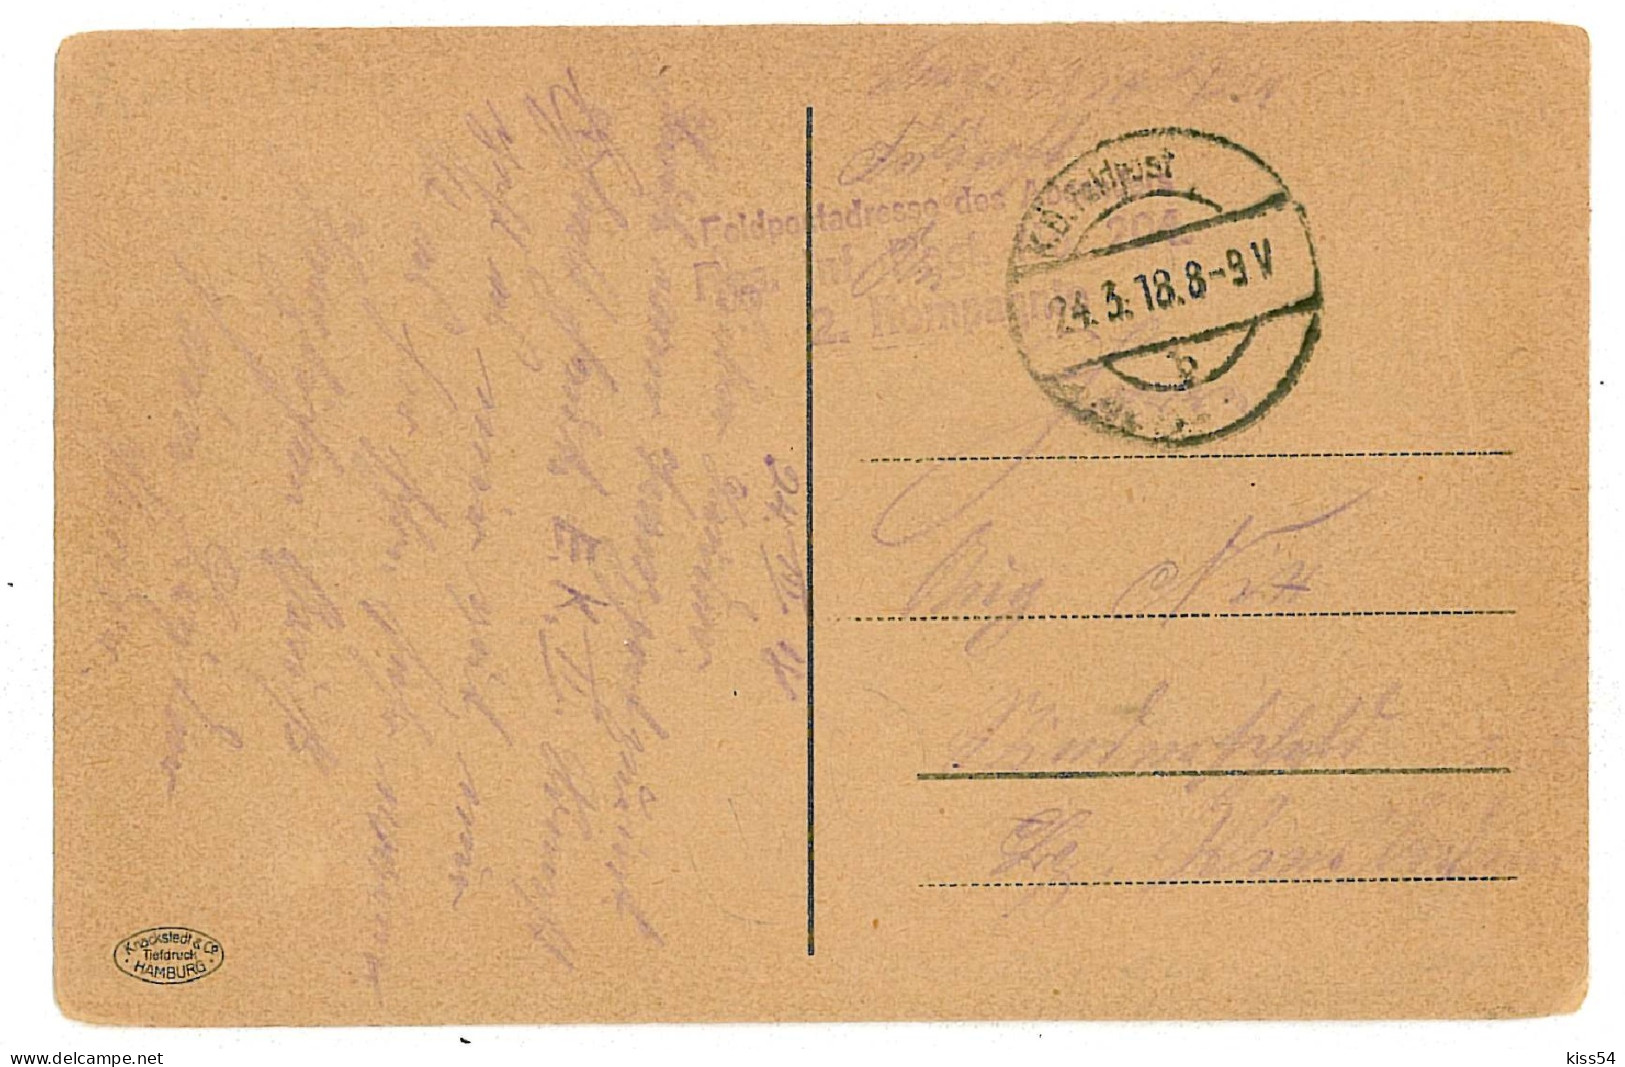 RO 40 - 1271 GALATI, Centrul, Caruta Si Trasuri, Romania - Old Postcard, CENSOR - Used - 1918 - Romania